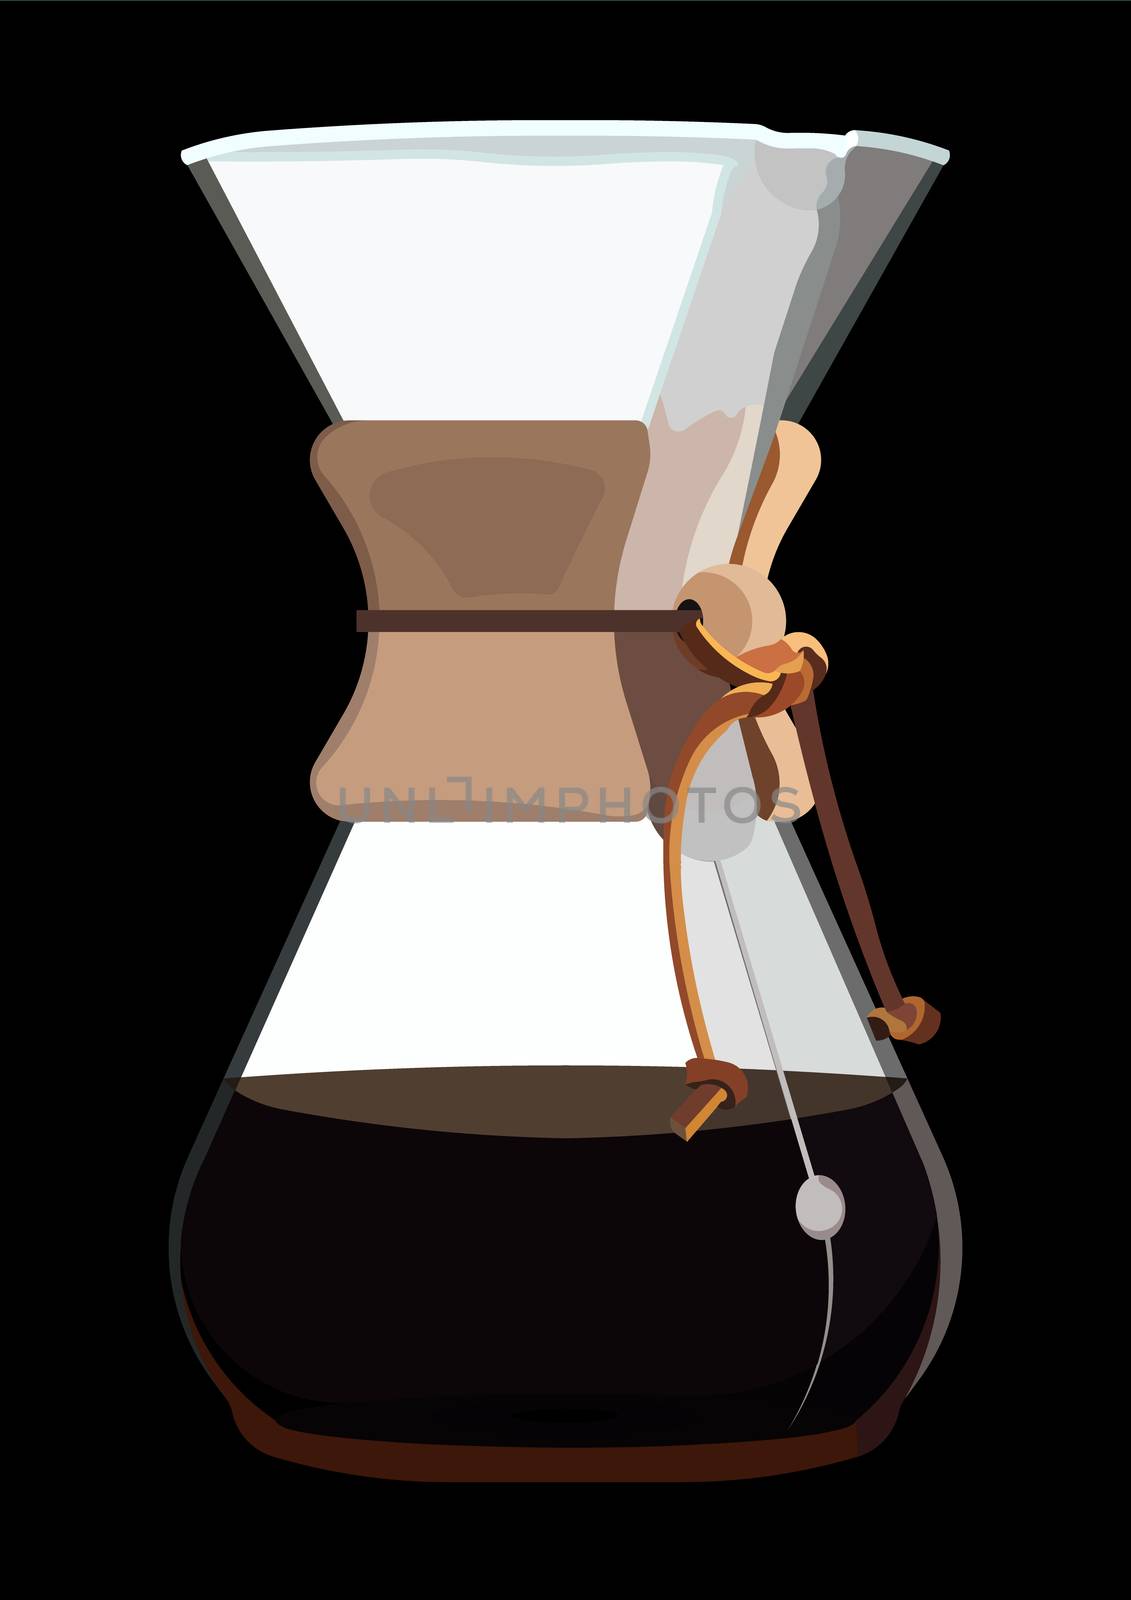 Chemex, drip coffee Maker, contain the brewed coffee.